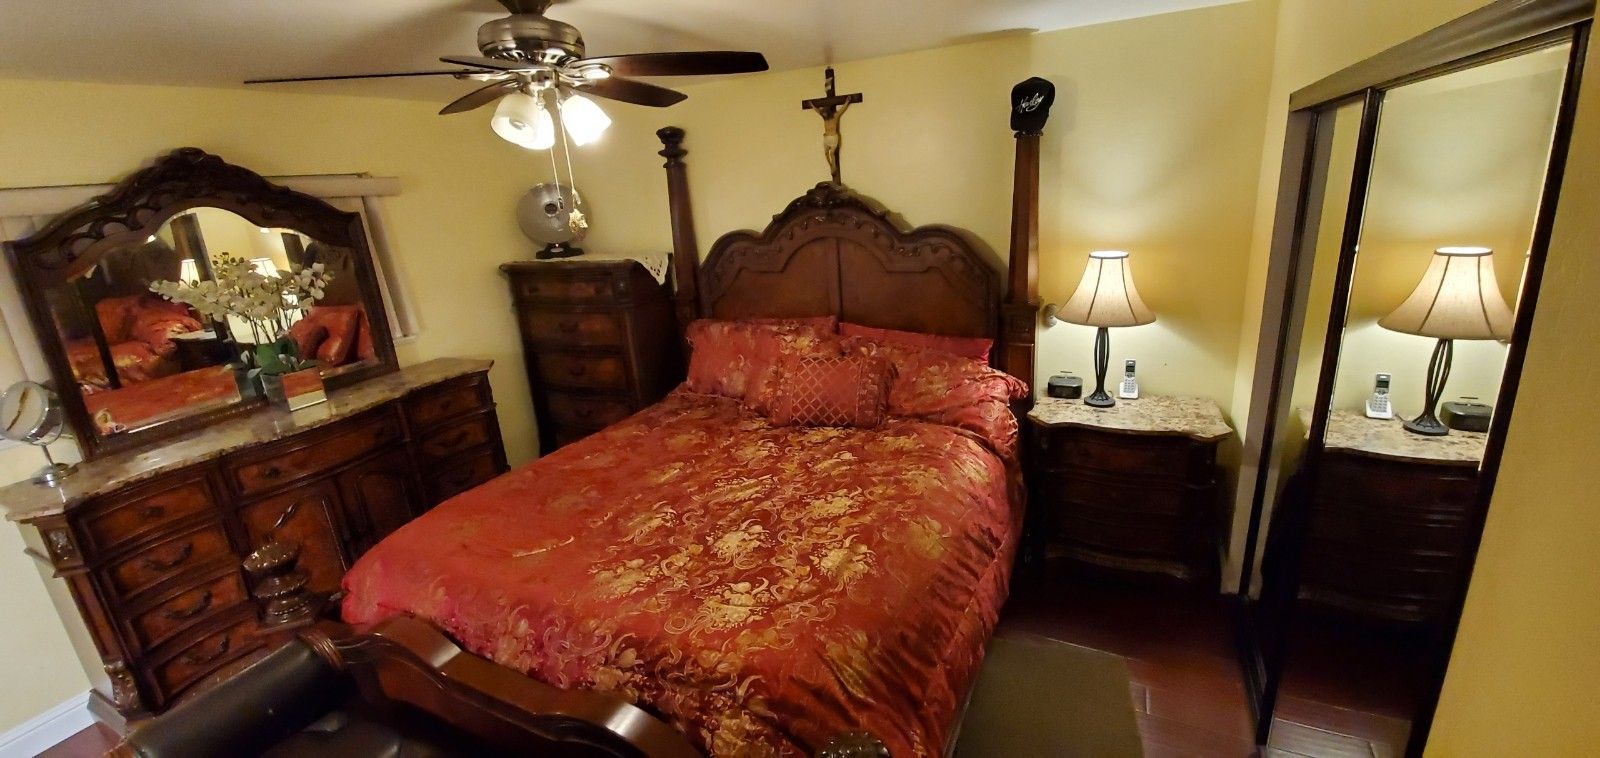 Cal king bedroom set